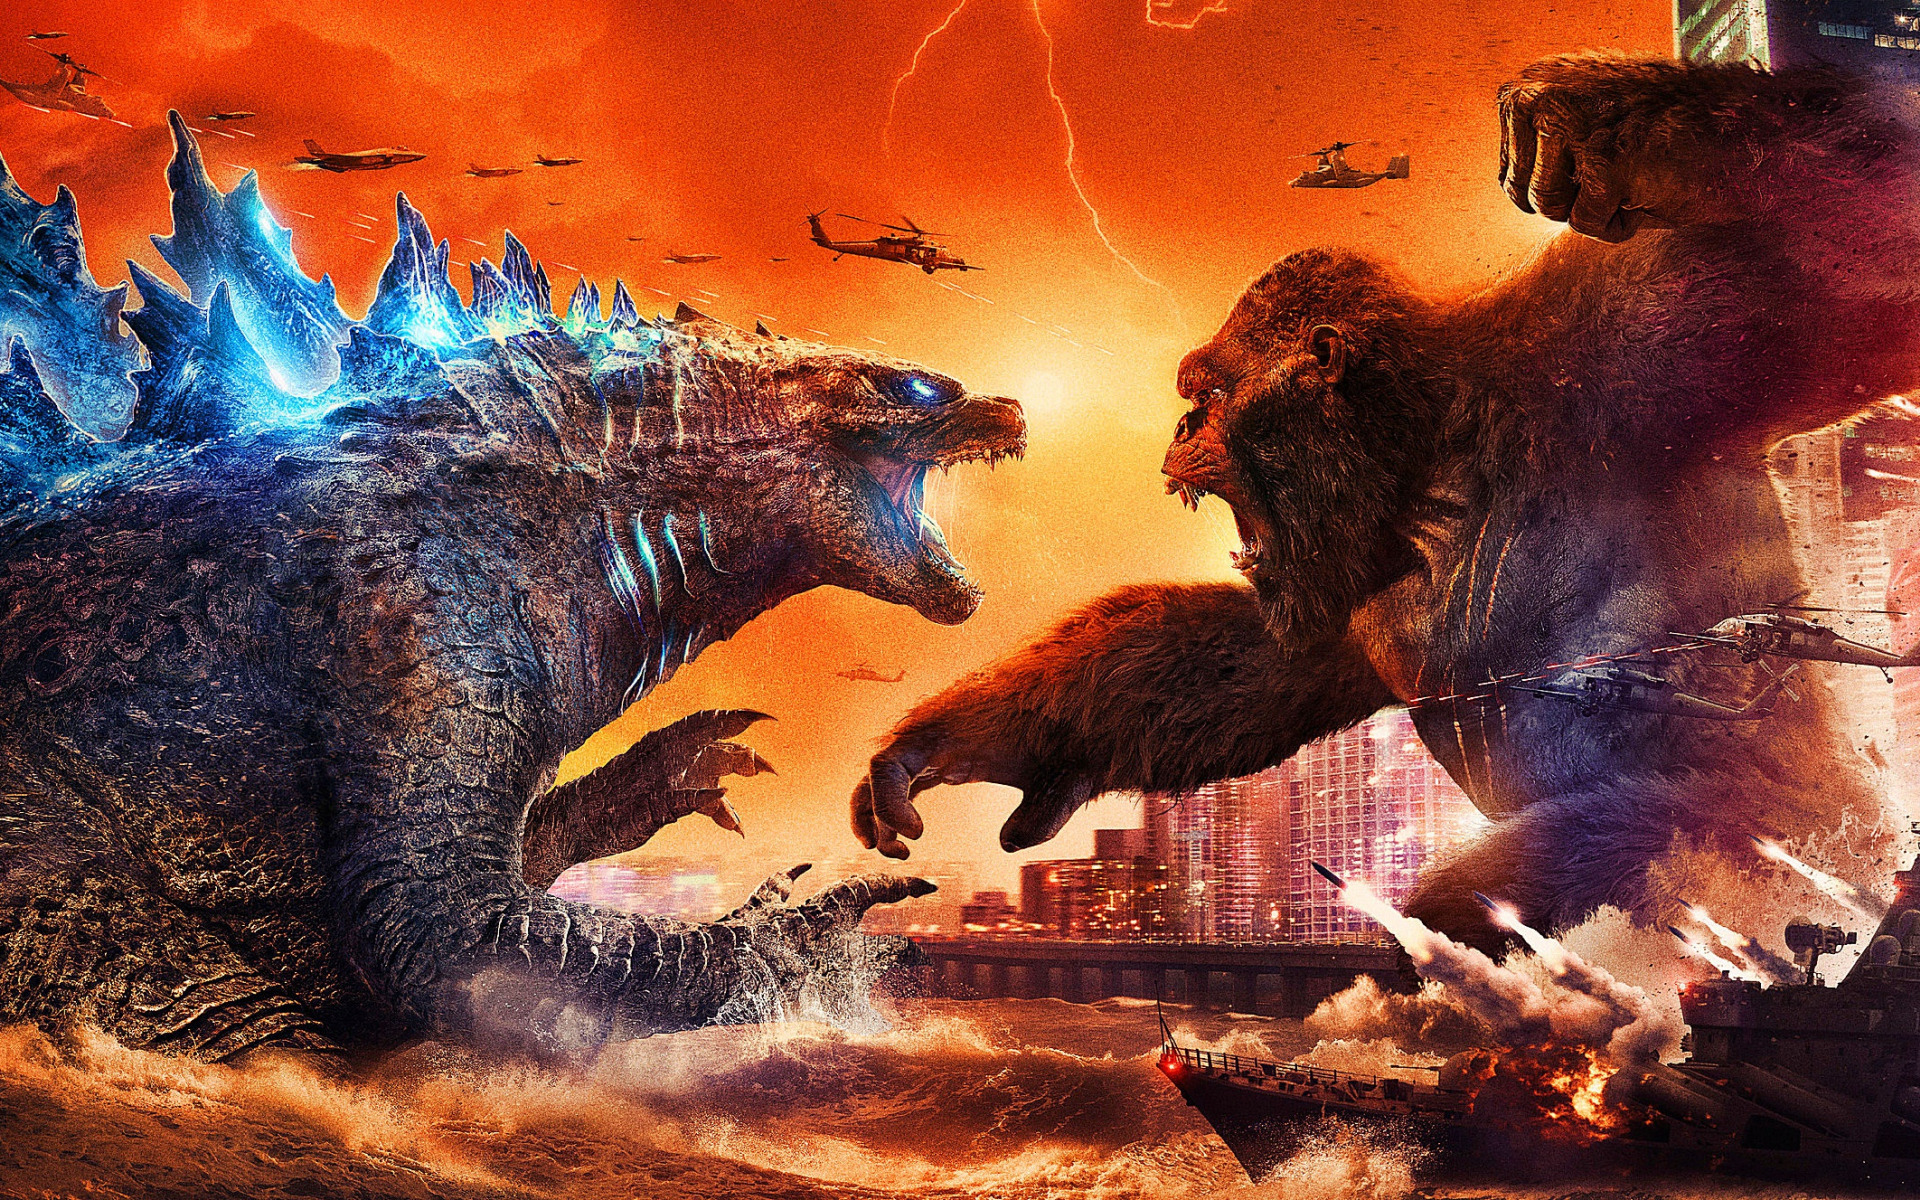 Godzilla x king kong. Годзилла против Конга. Конг против Годзиллы 2021.